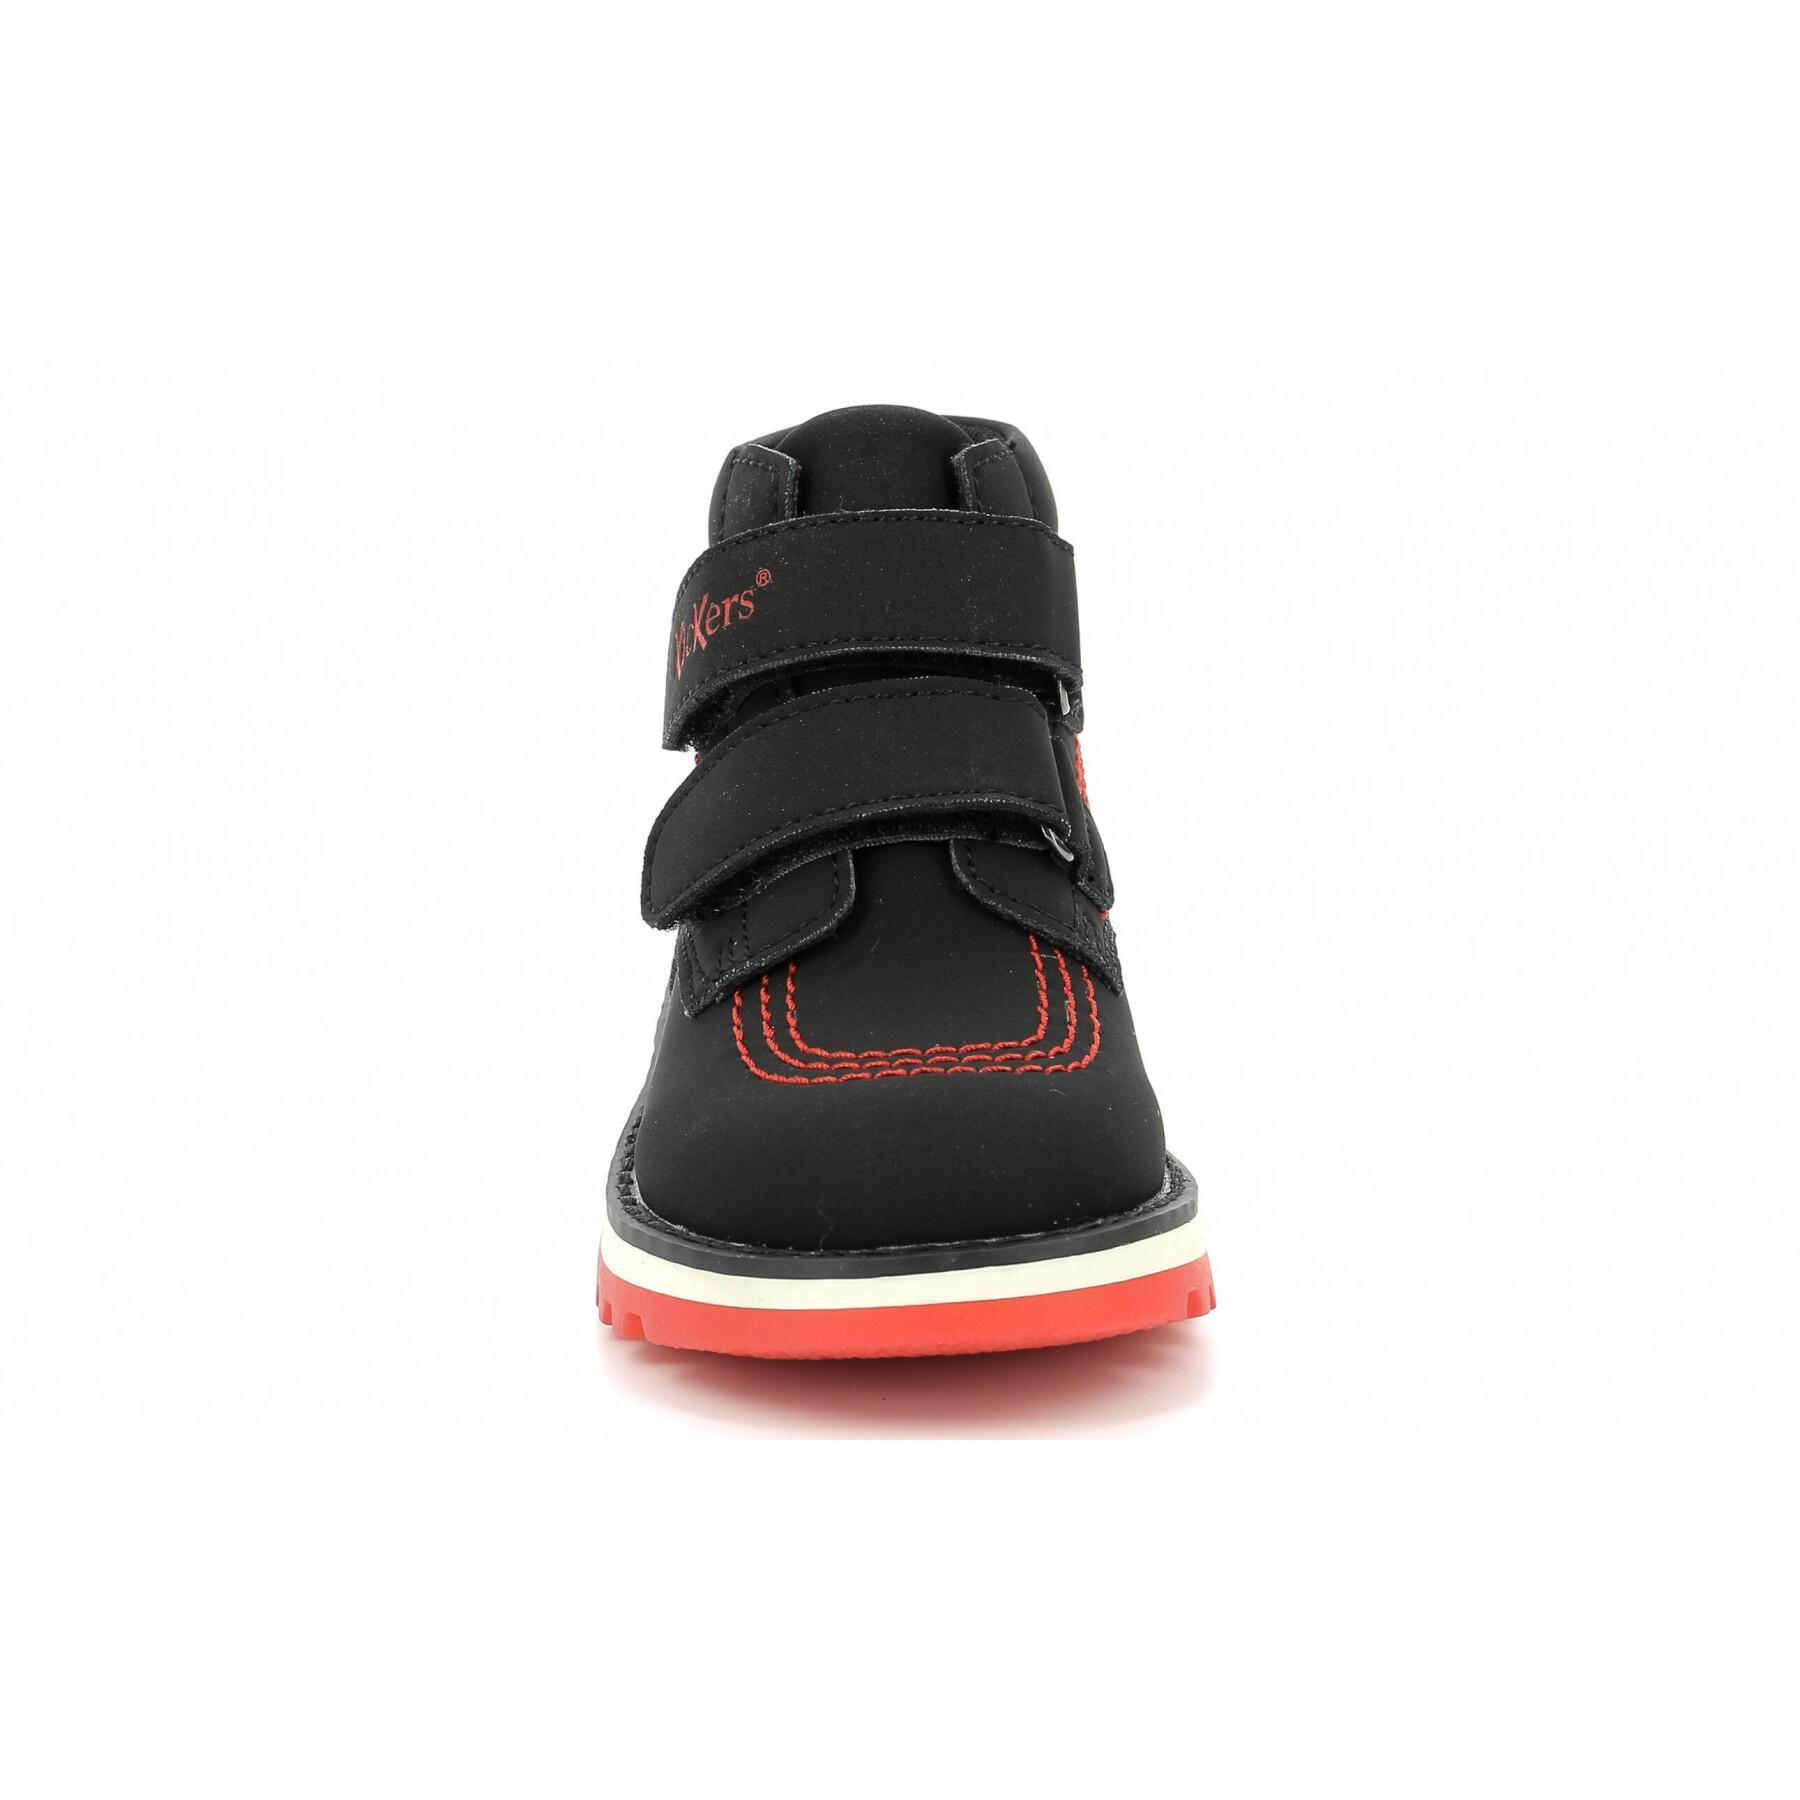 Baby sneakers Kickers Kickfun